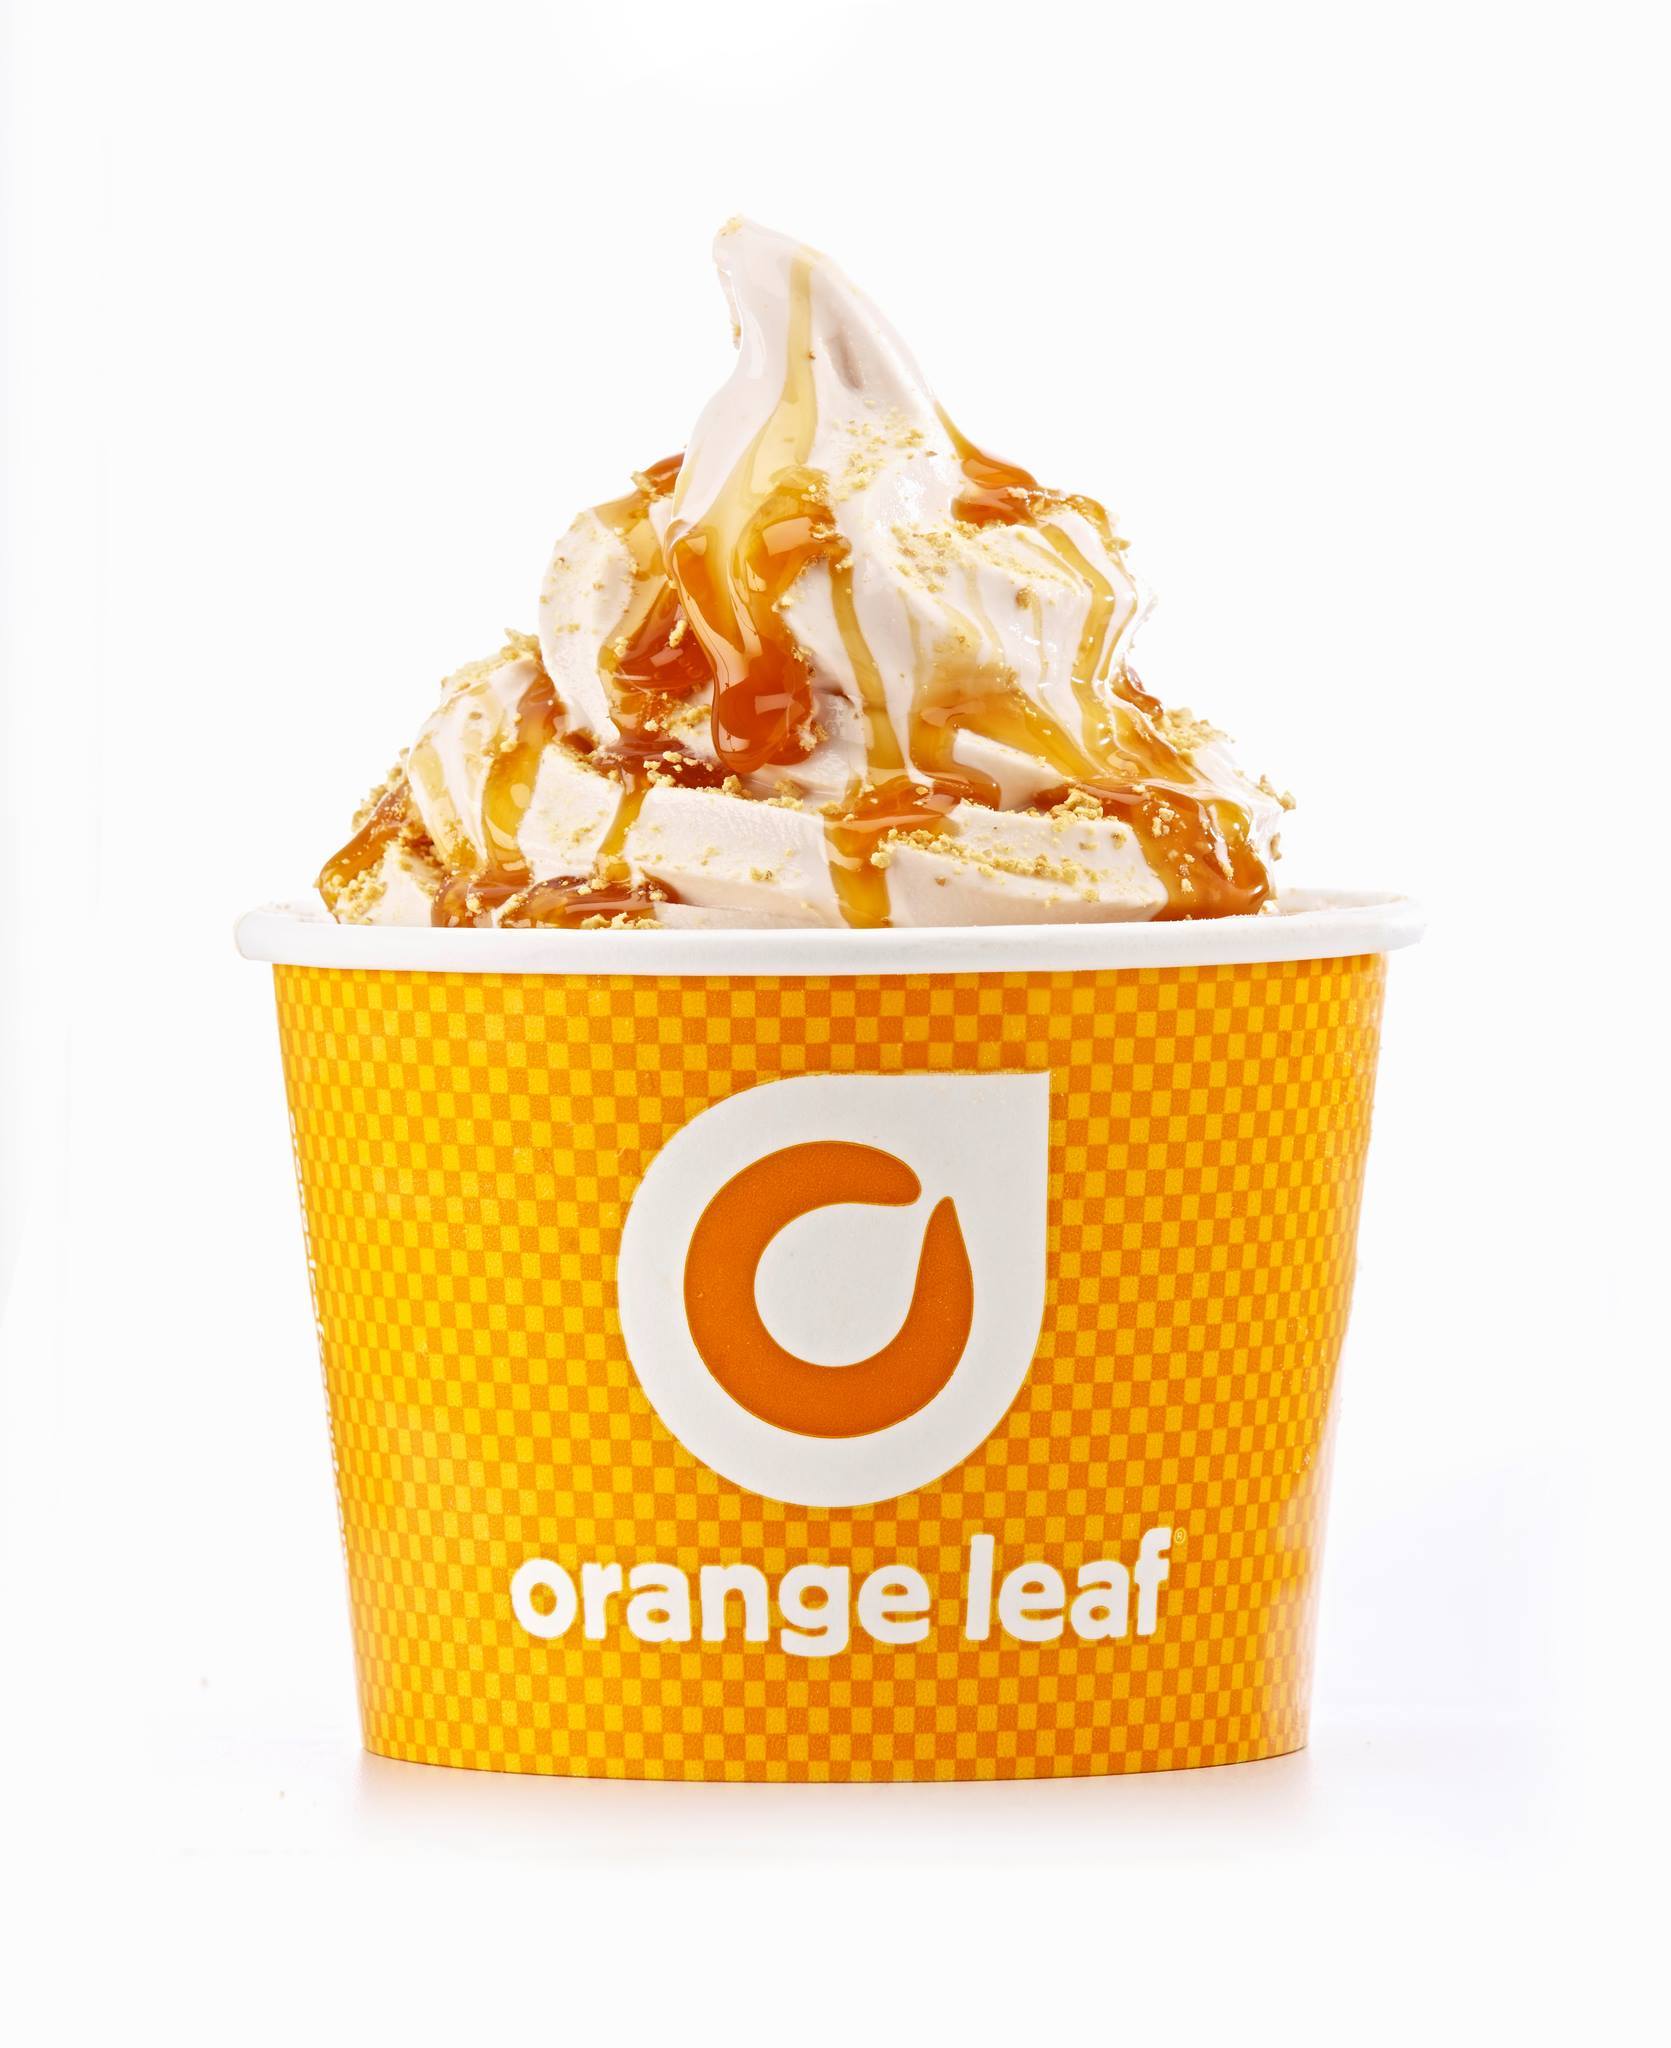 Orange Leaf Yogurt Logo - Orange Leaf Frozen Yogurt Indulges in New Salted Caramel Froyo ...